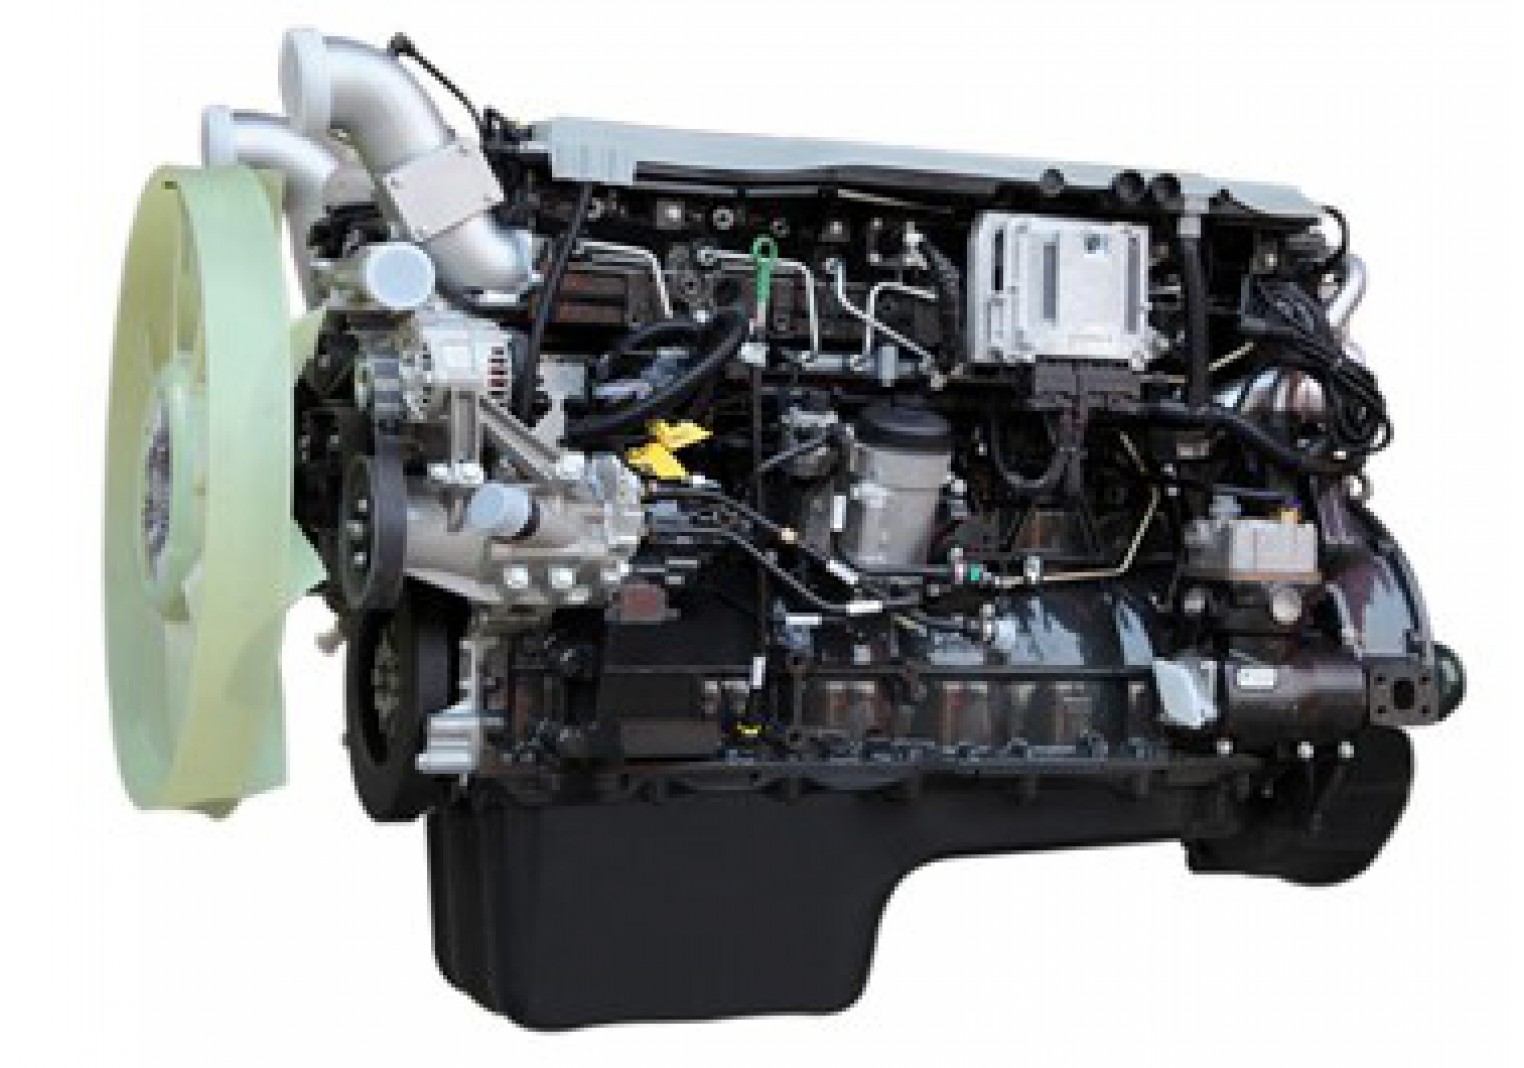 Construction Diesel Engine MC11.40